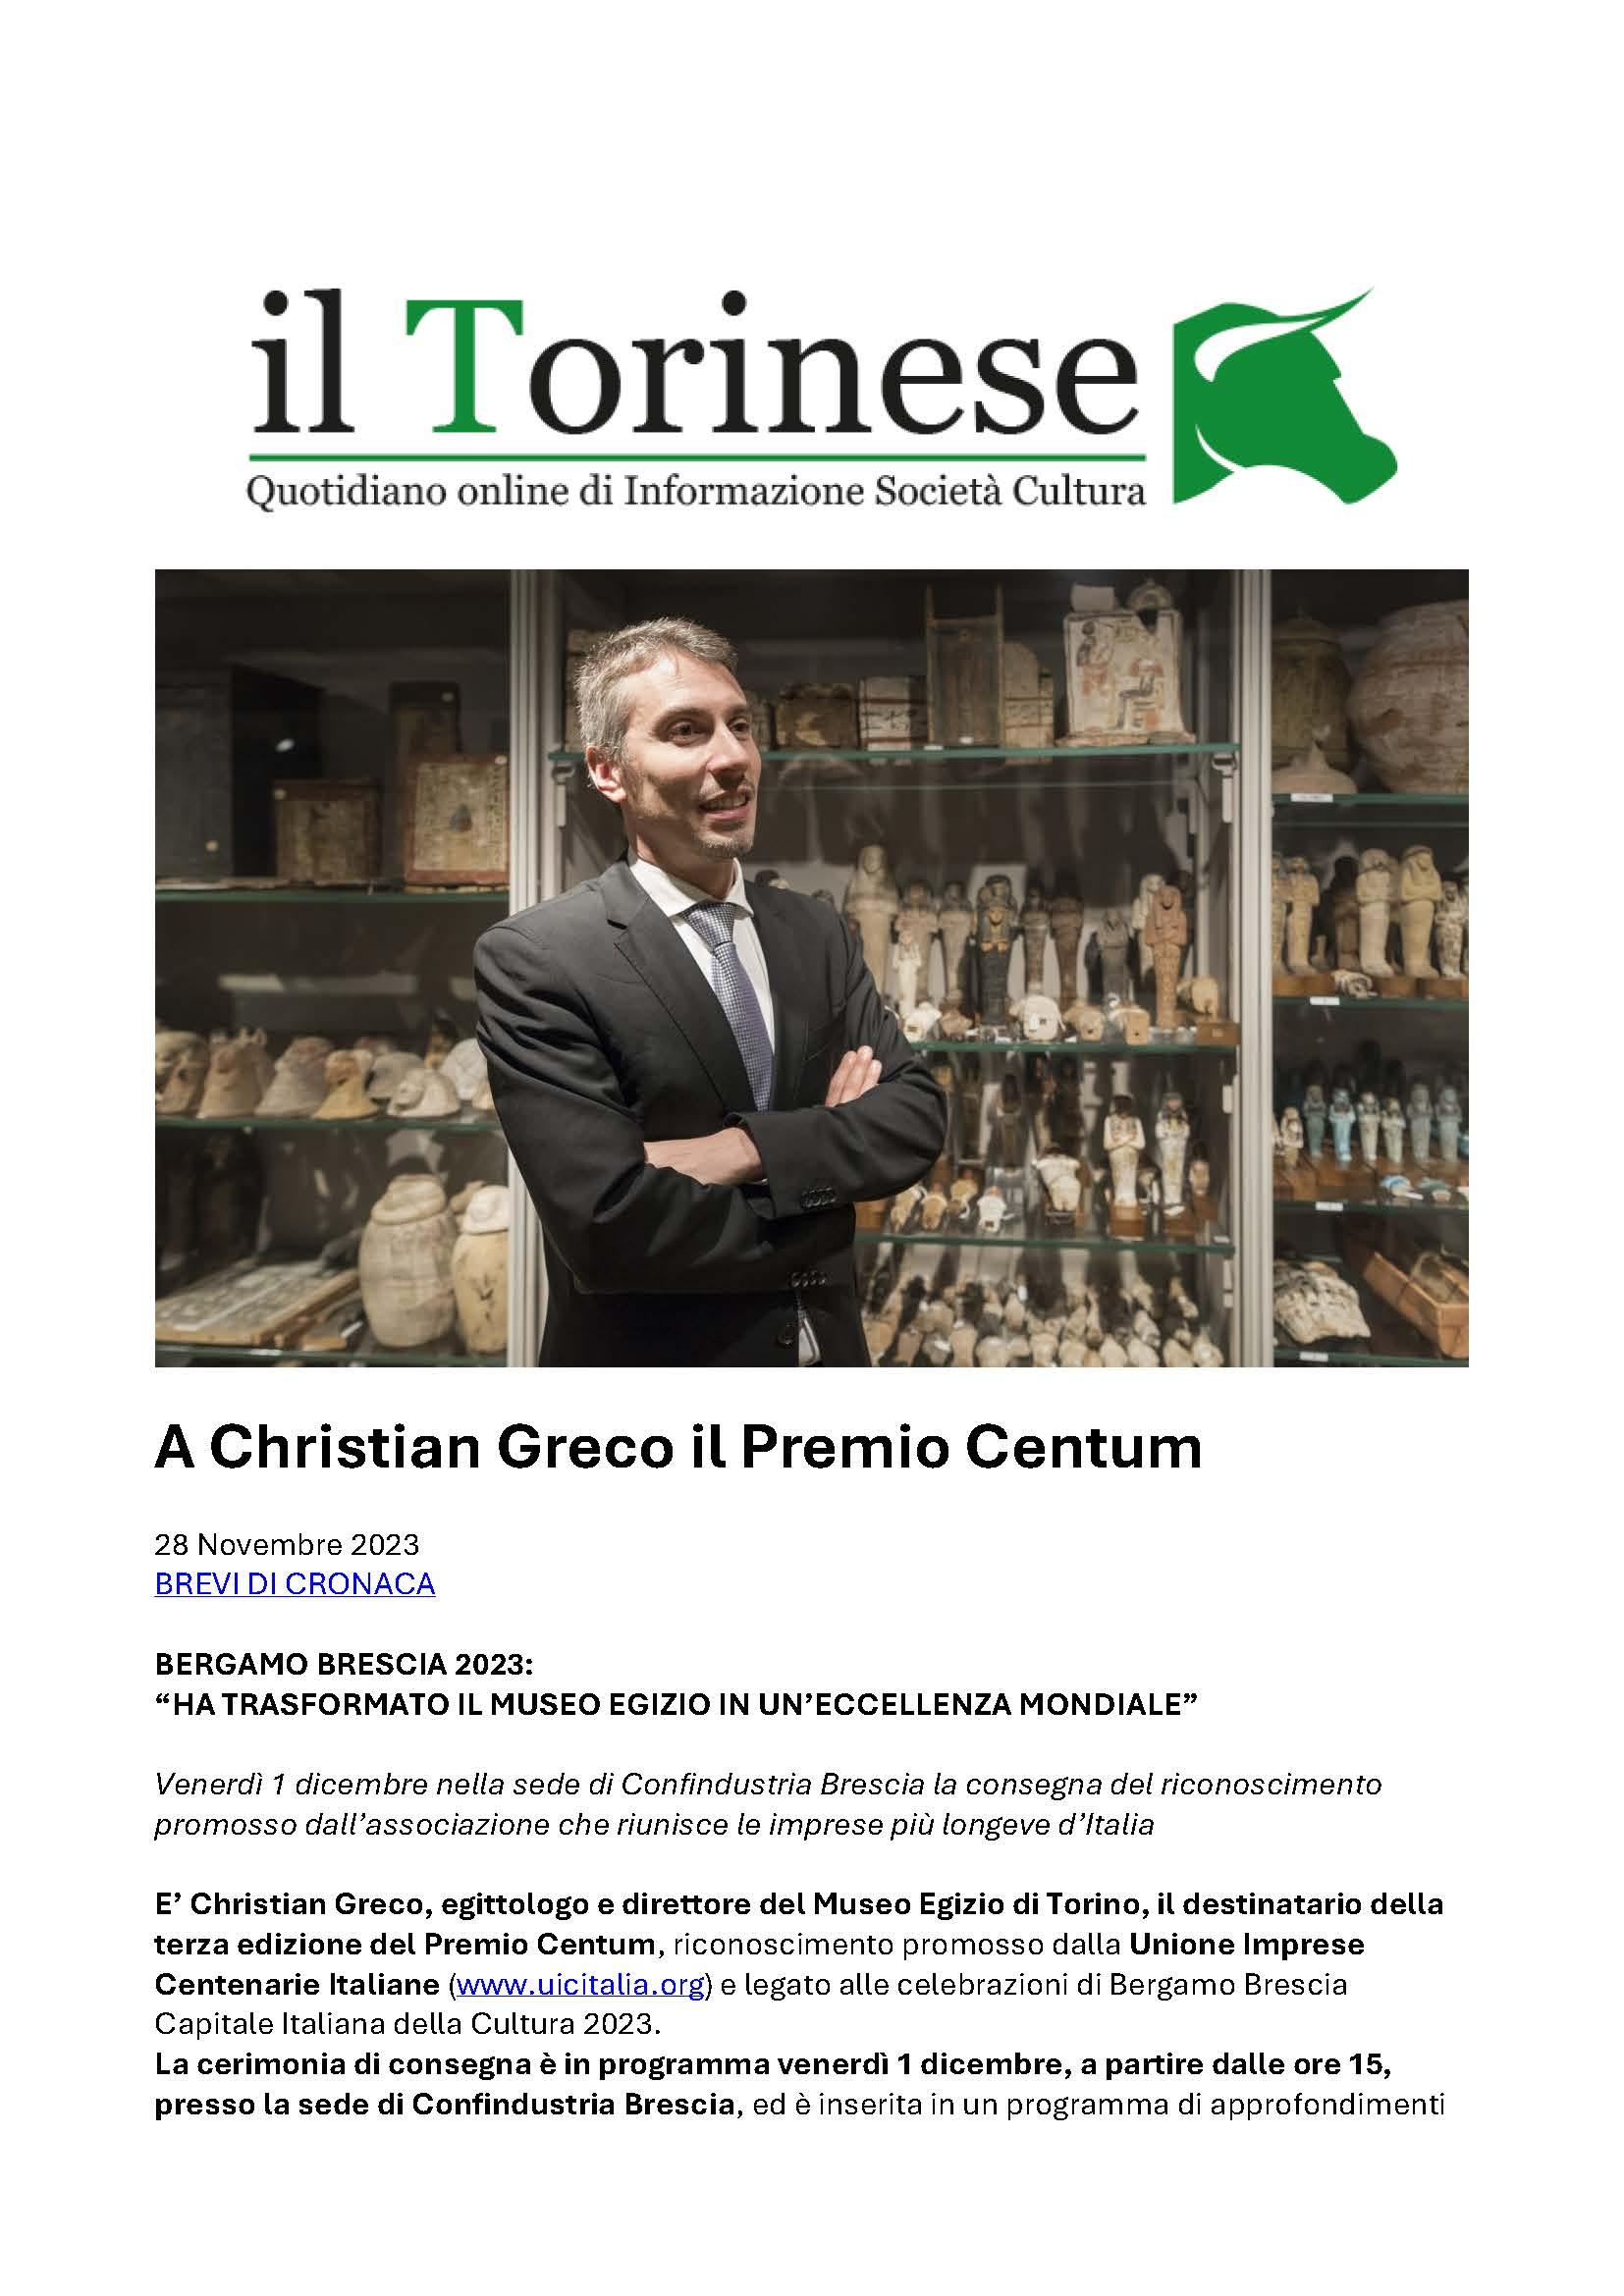 Il Torinese A Christian Greco28 11 2023 Pagina 1